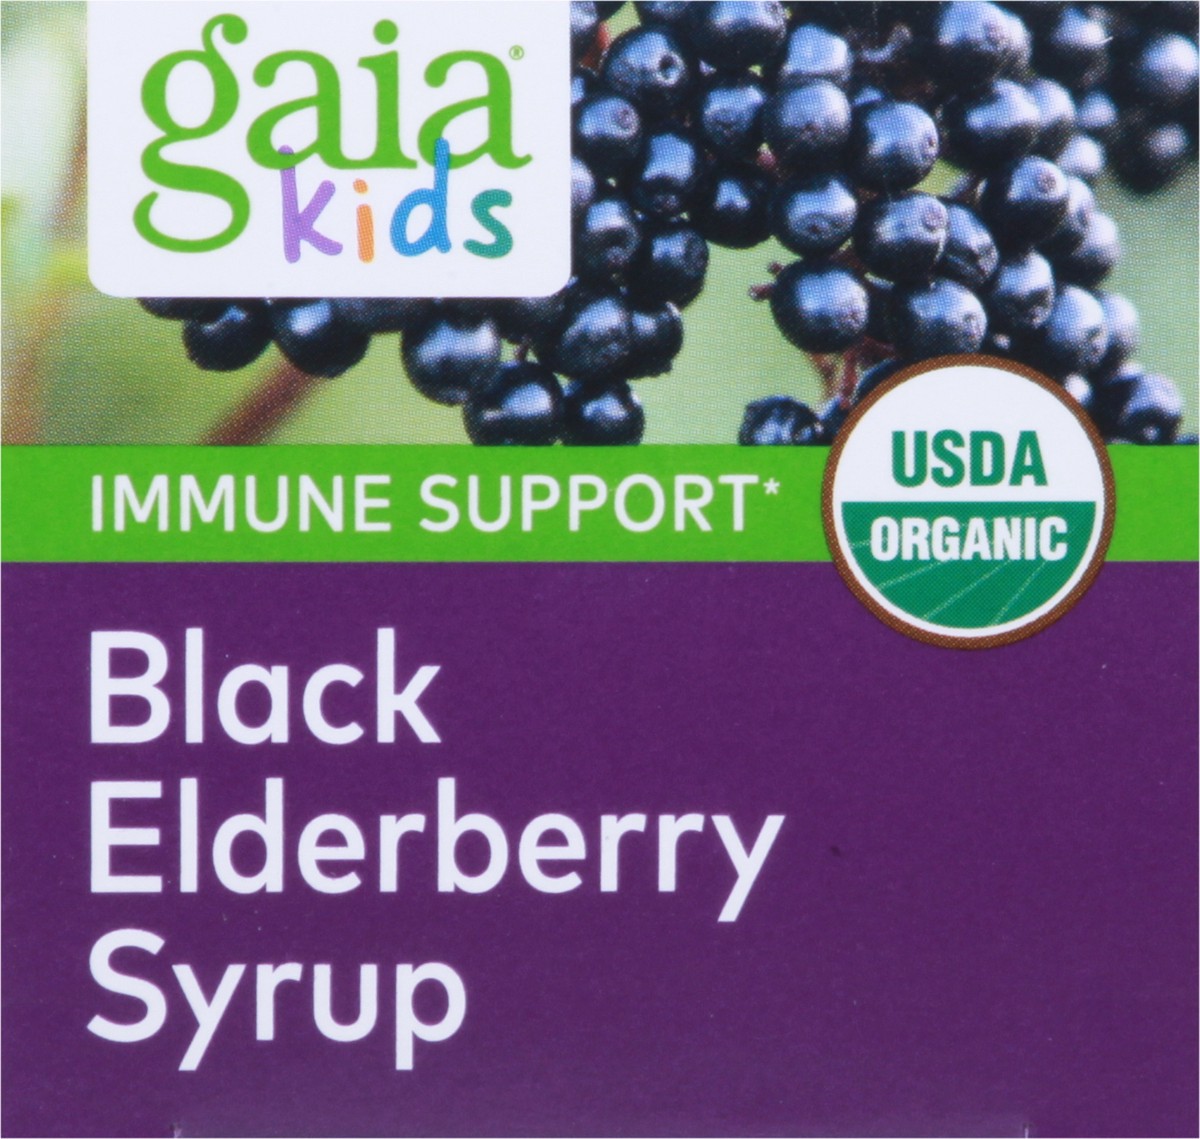 slide 9 of 9, Gaia Kids Syrup Immune Support 3 fl oz, 3 fl oz